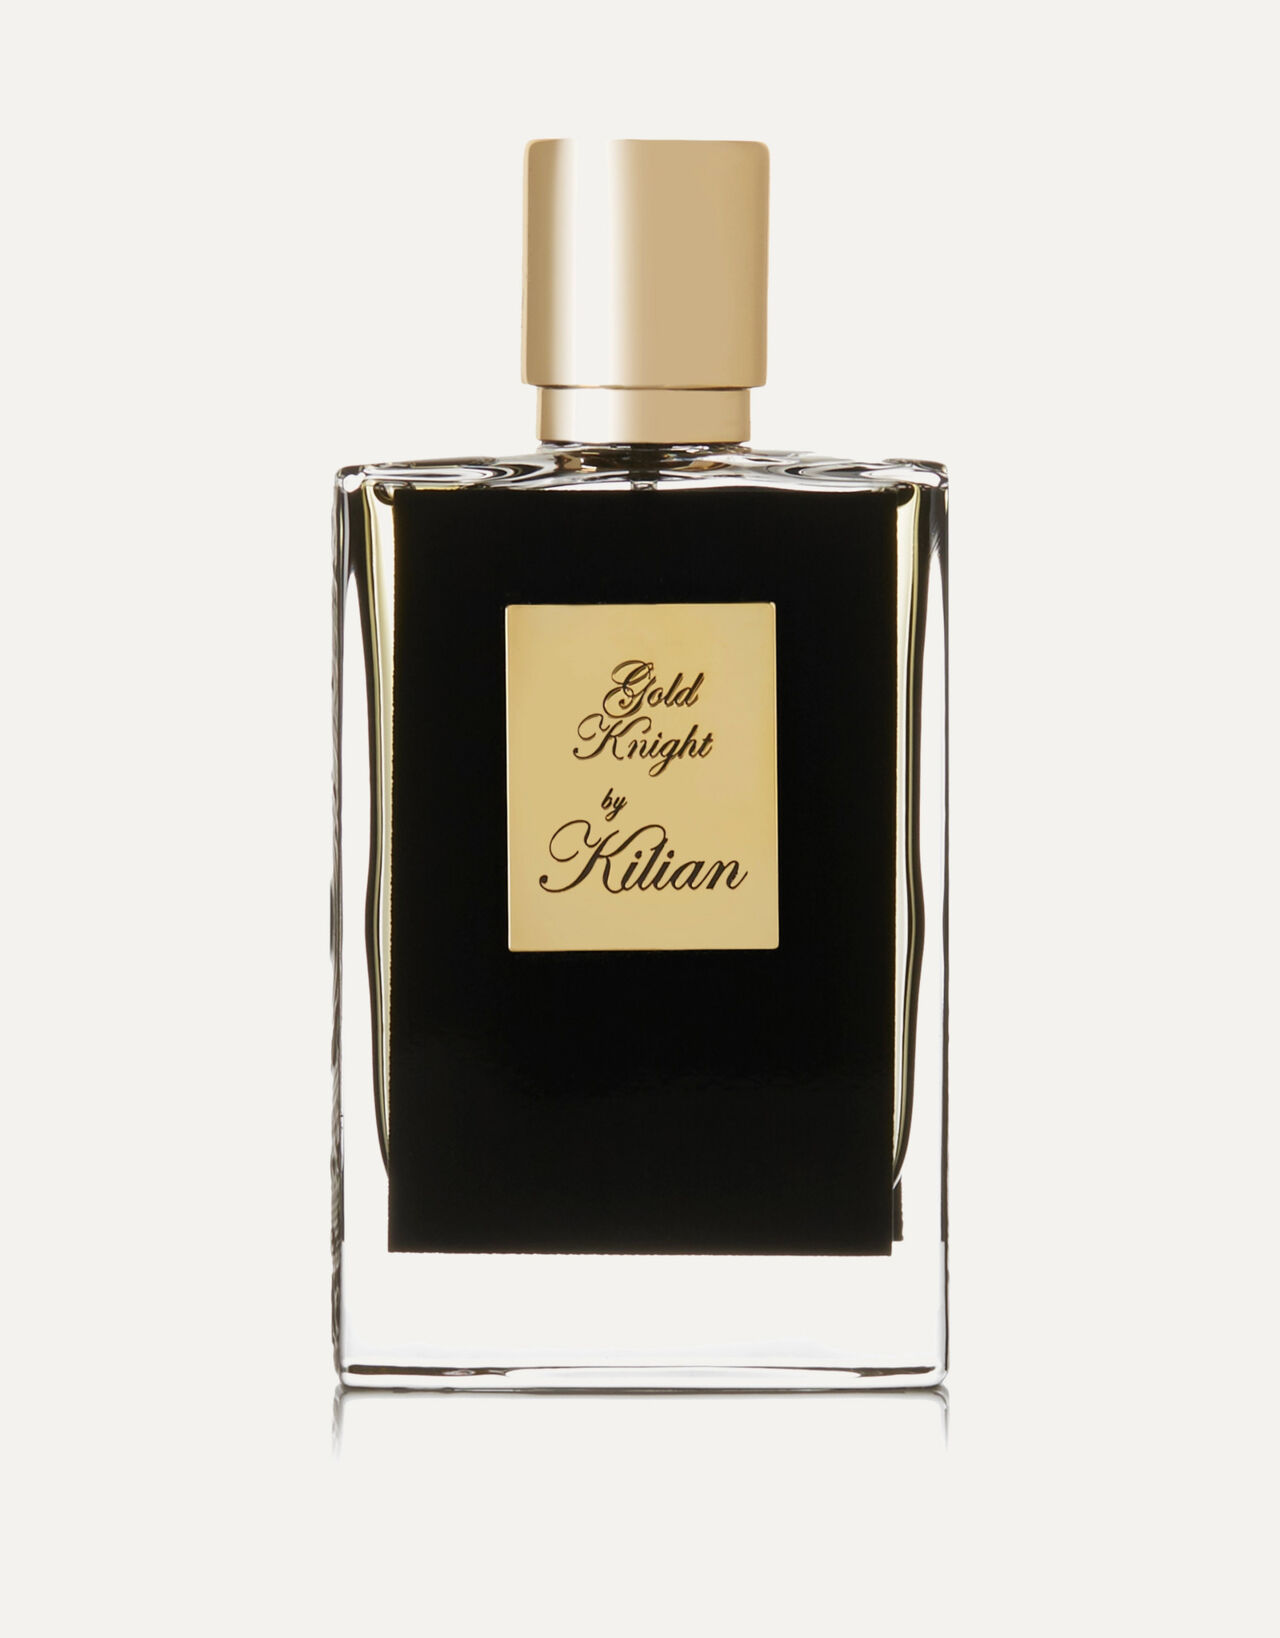 Kilian Gold Knight Parfum